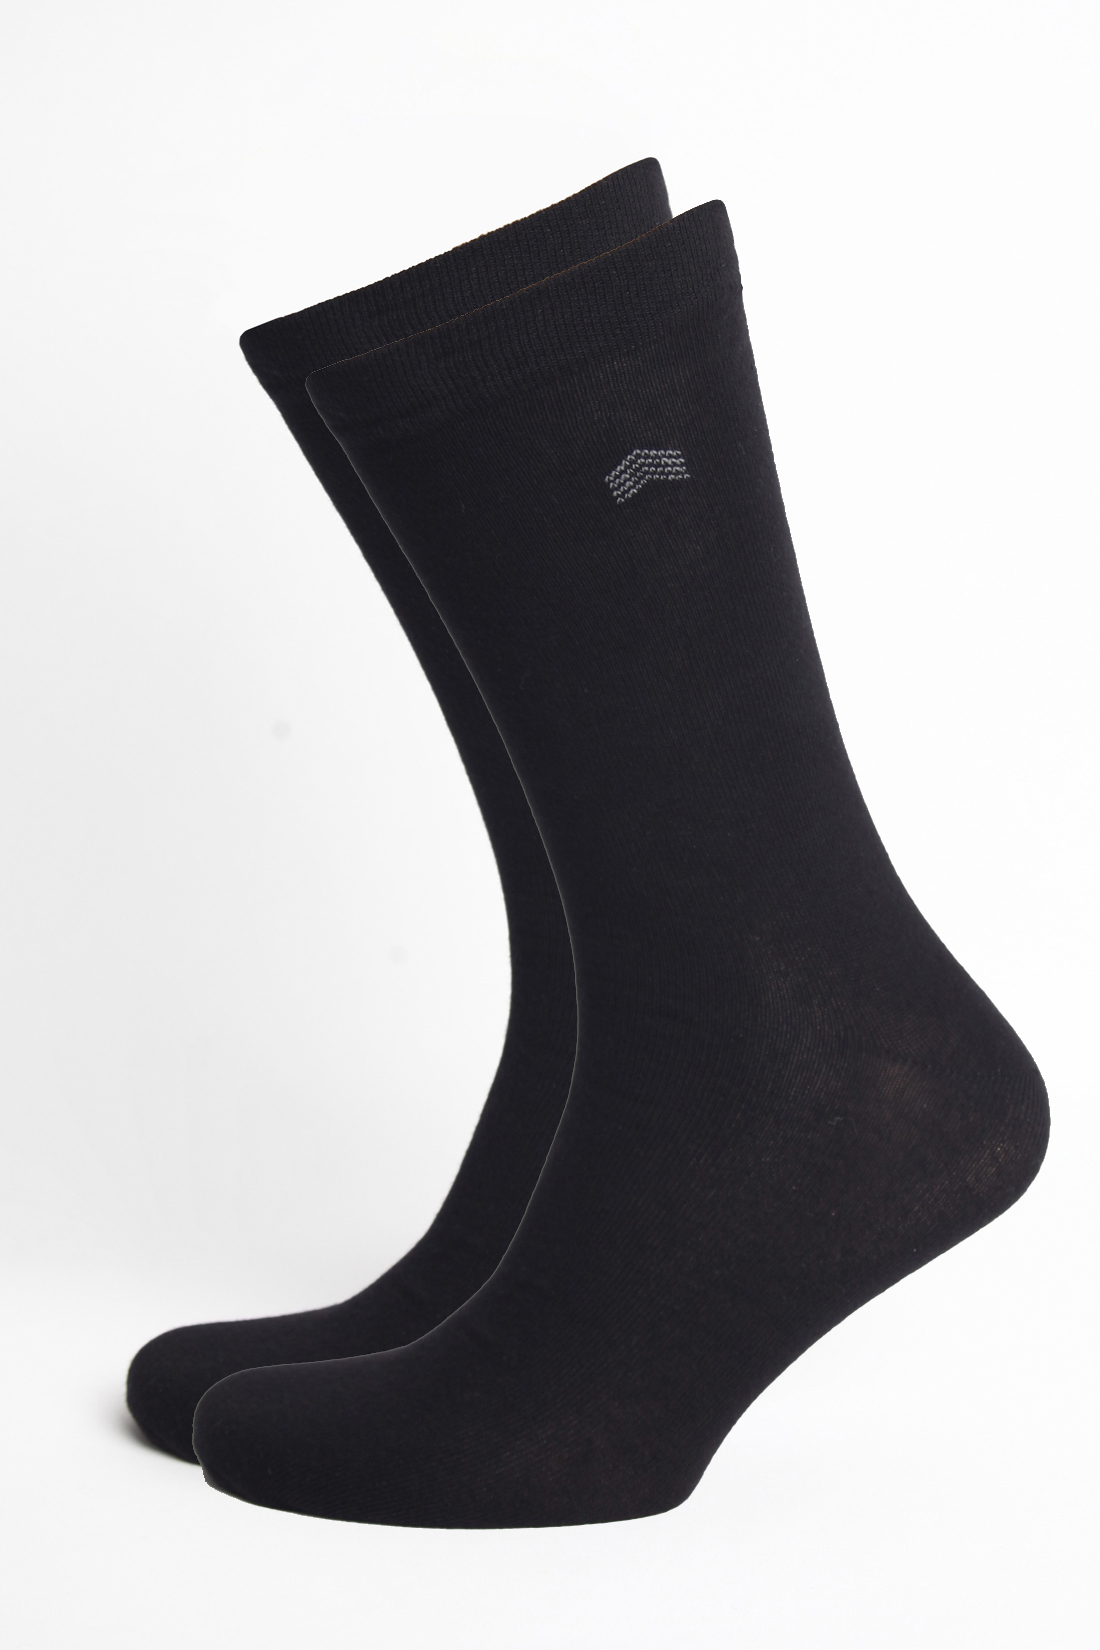 Мужские носки, 2 пары (арт. baon B891101), размер 43/45, цвет черный